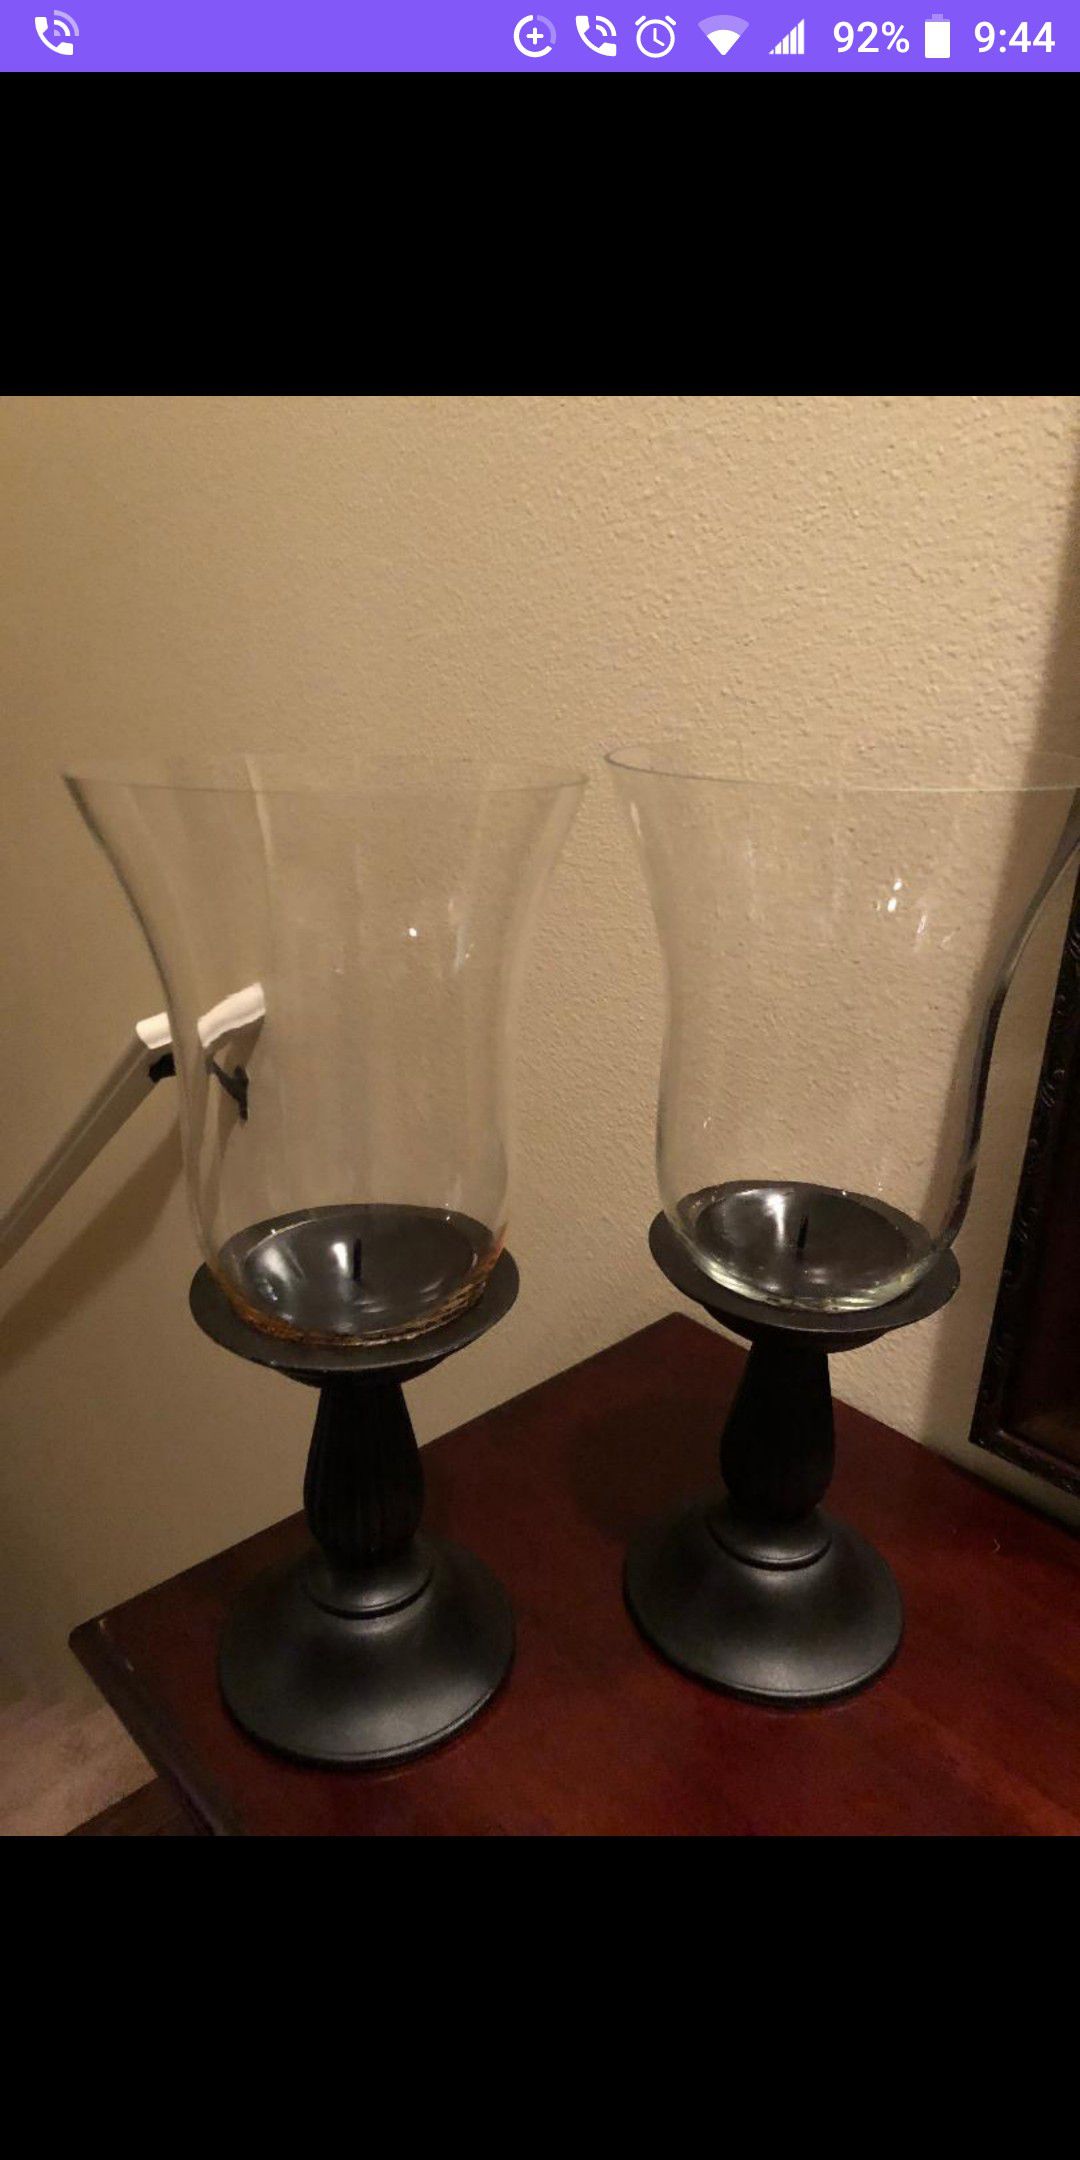 Glass holders